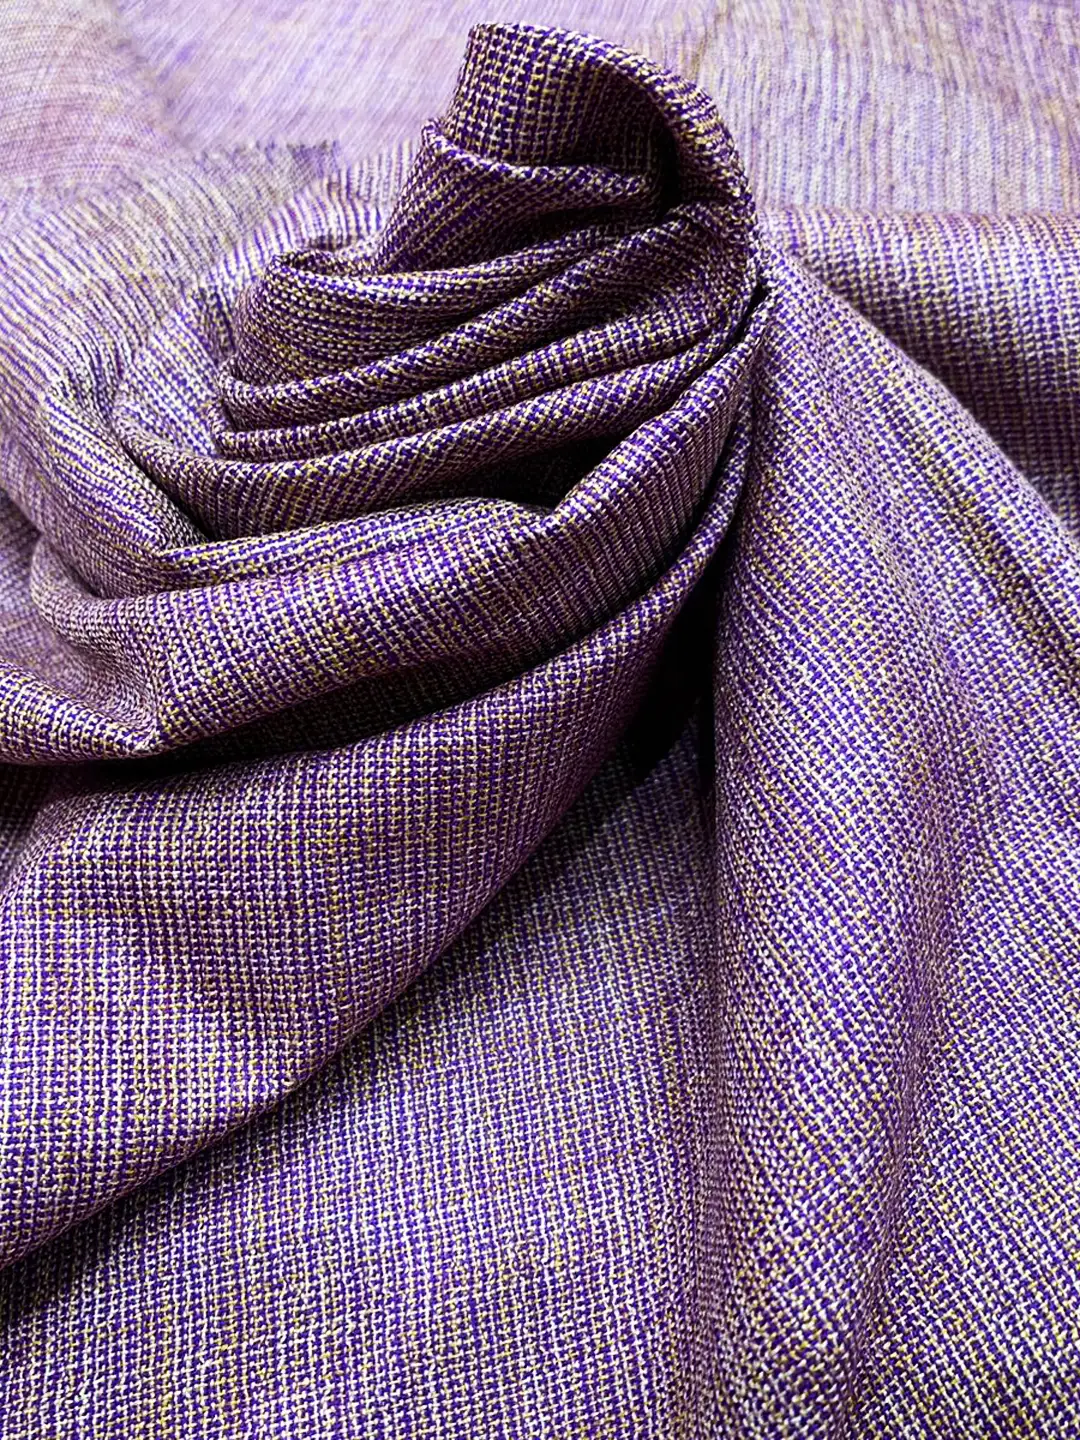 Tweed Textured Khadi/Khaddar Cotton Fabric from Kanpur